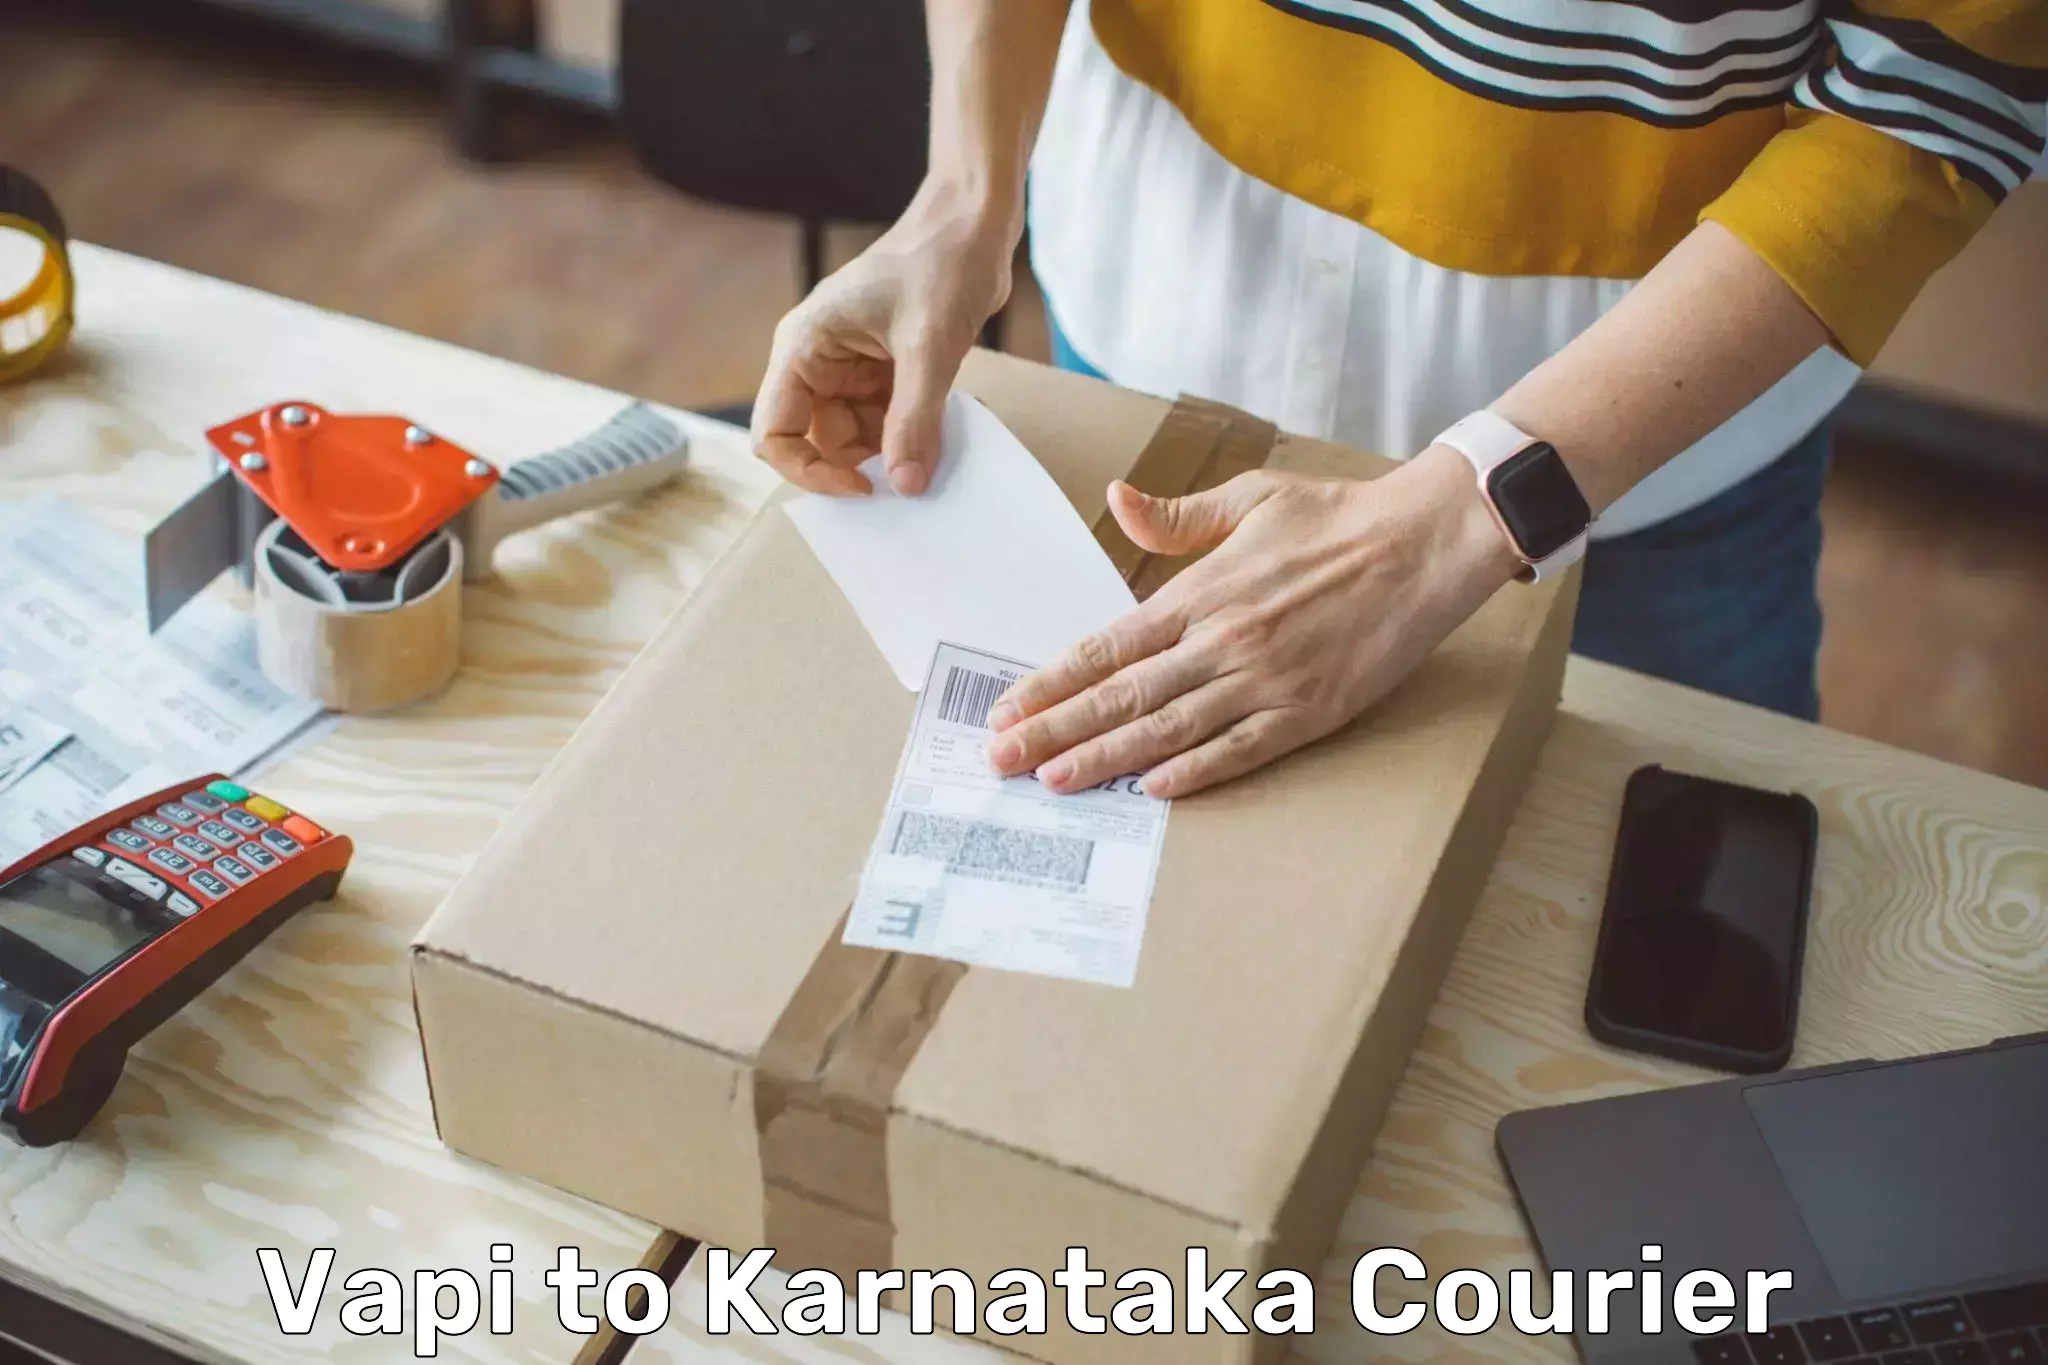 Subscription-based courier Vapi to Karnataka